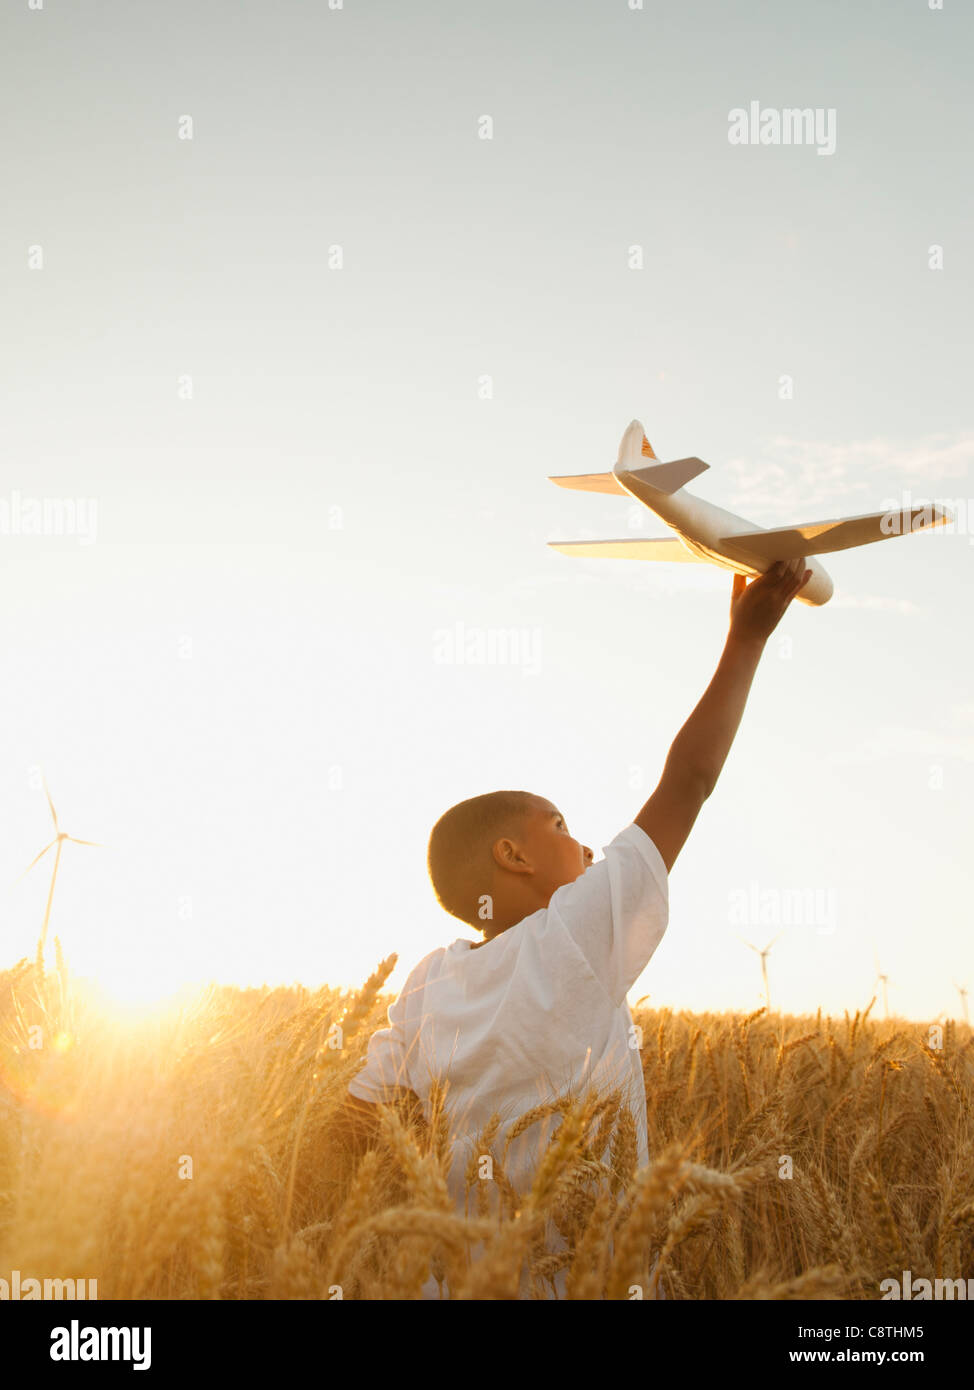 USA, Oregon, Wasco, Boy playing with toy aeroplane in wheat field Stock Photo